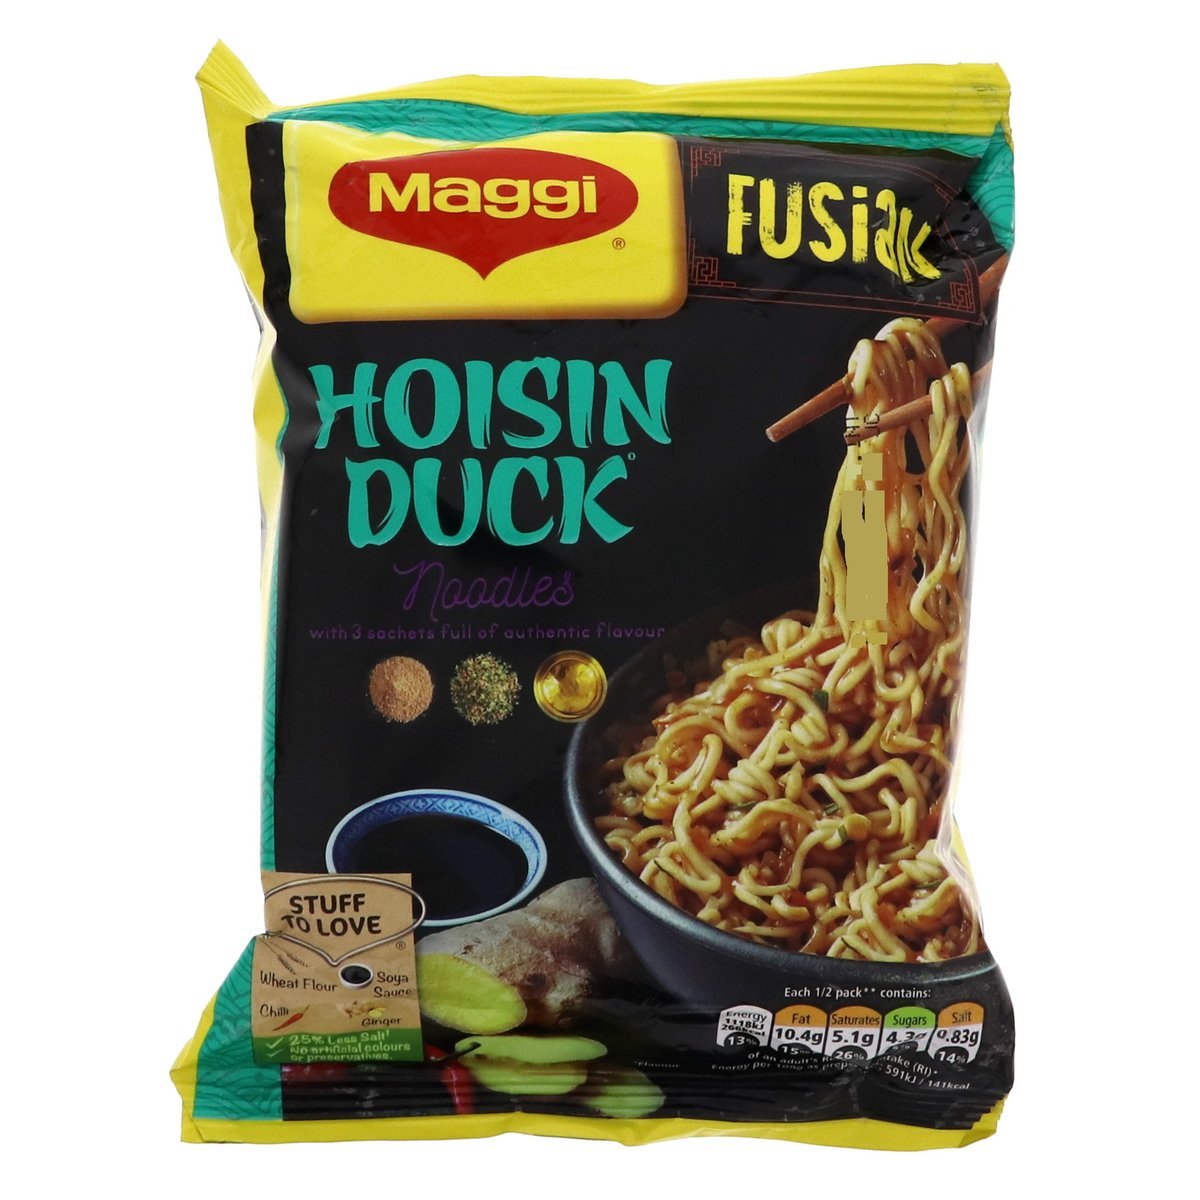 Maggi Fusian Noodles Hoisin Duck 117 g